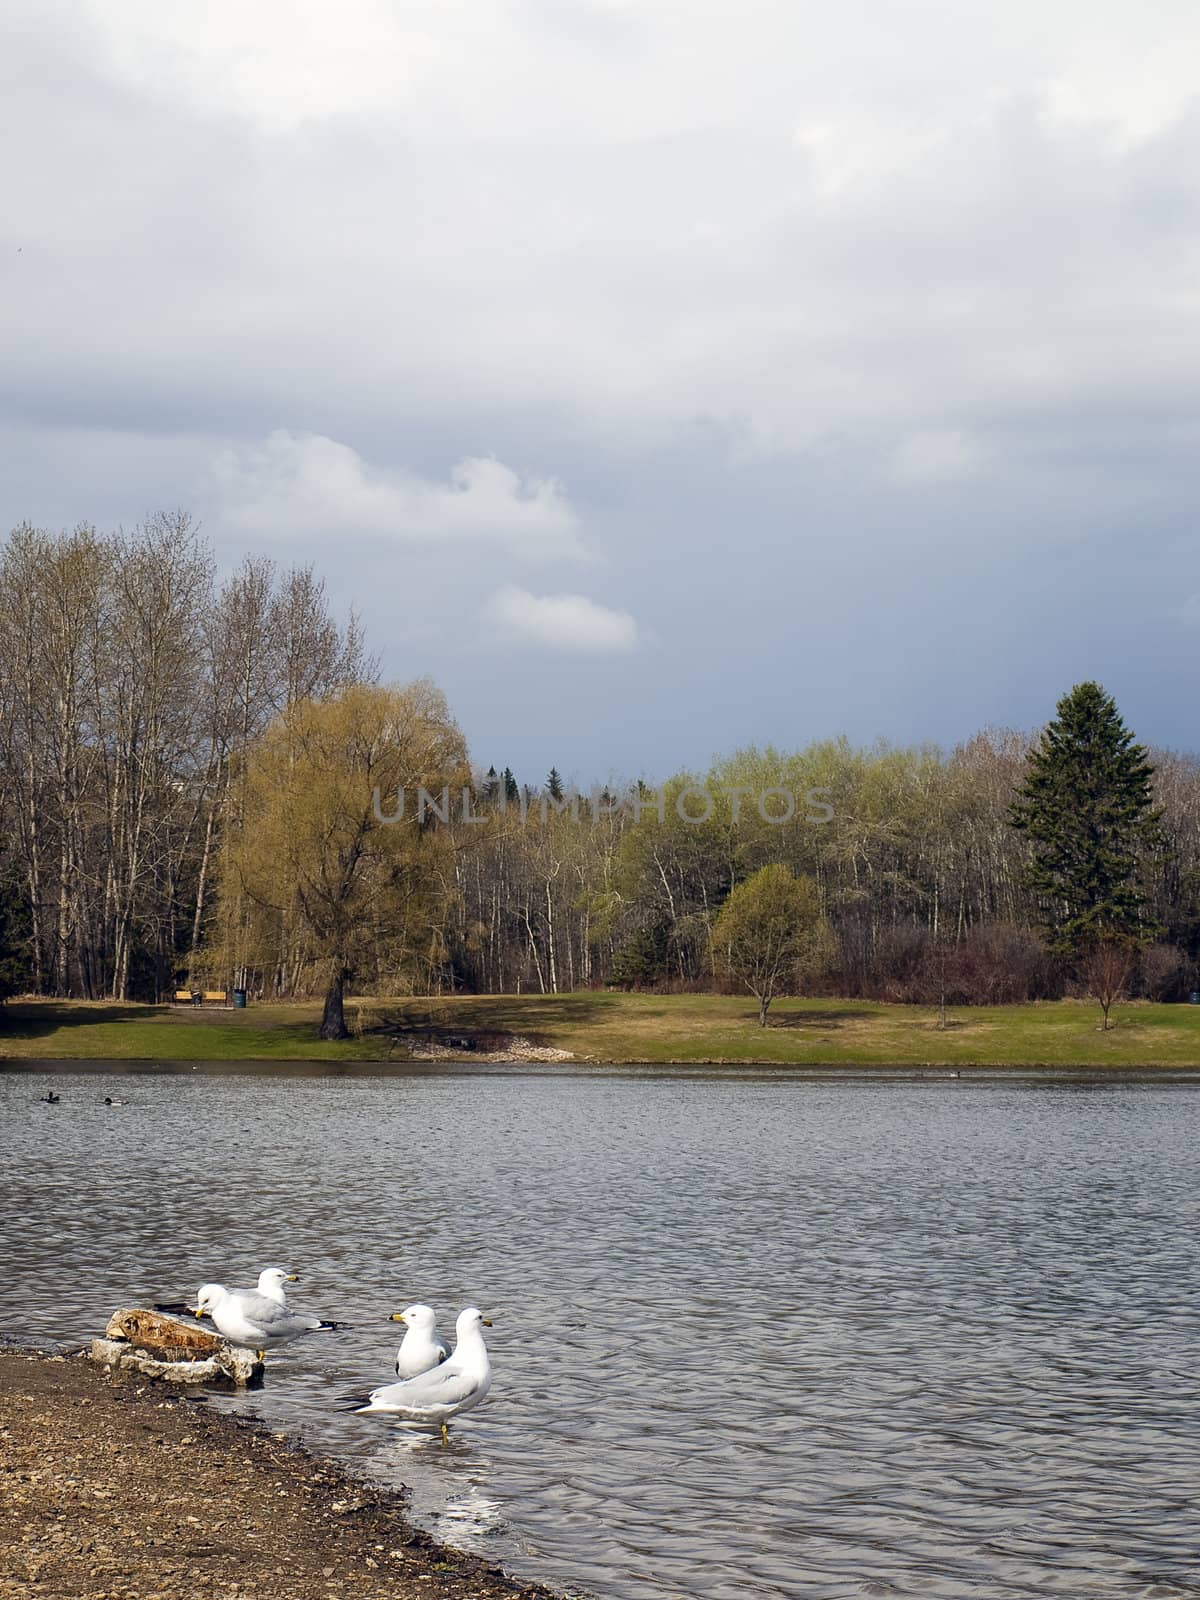 Gulls by the Pond by watamyr